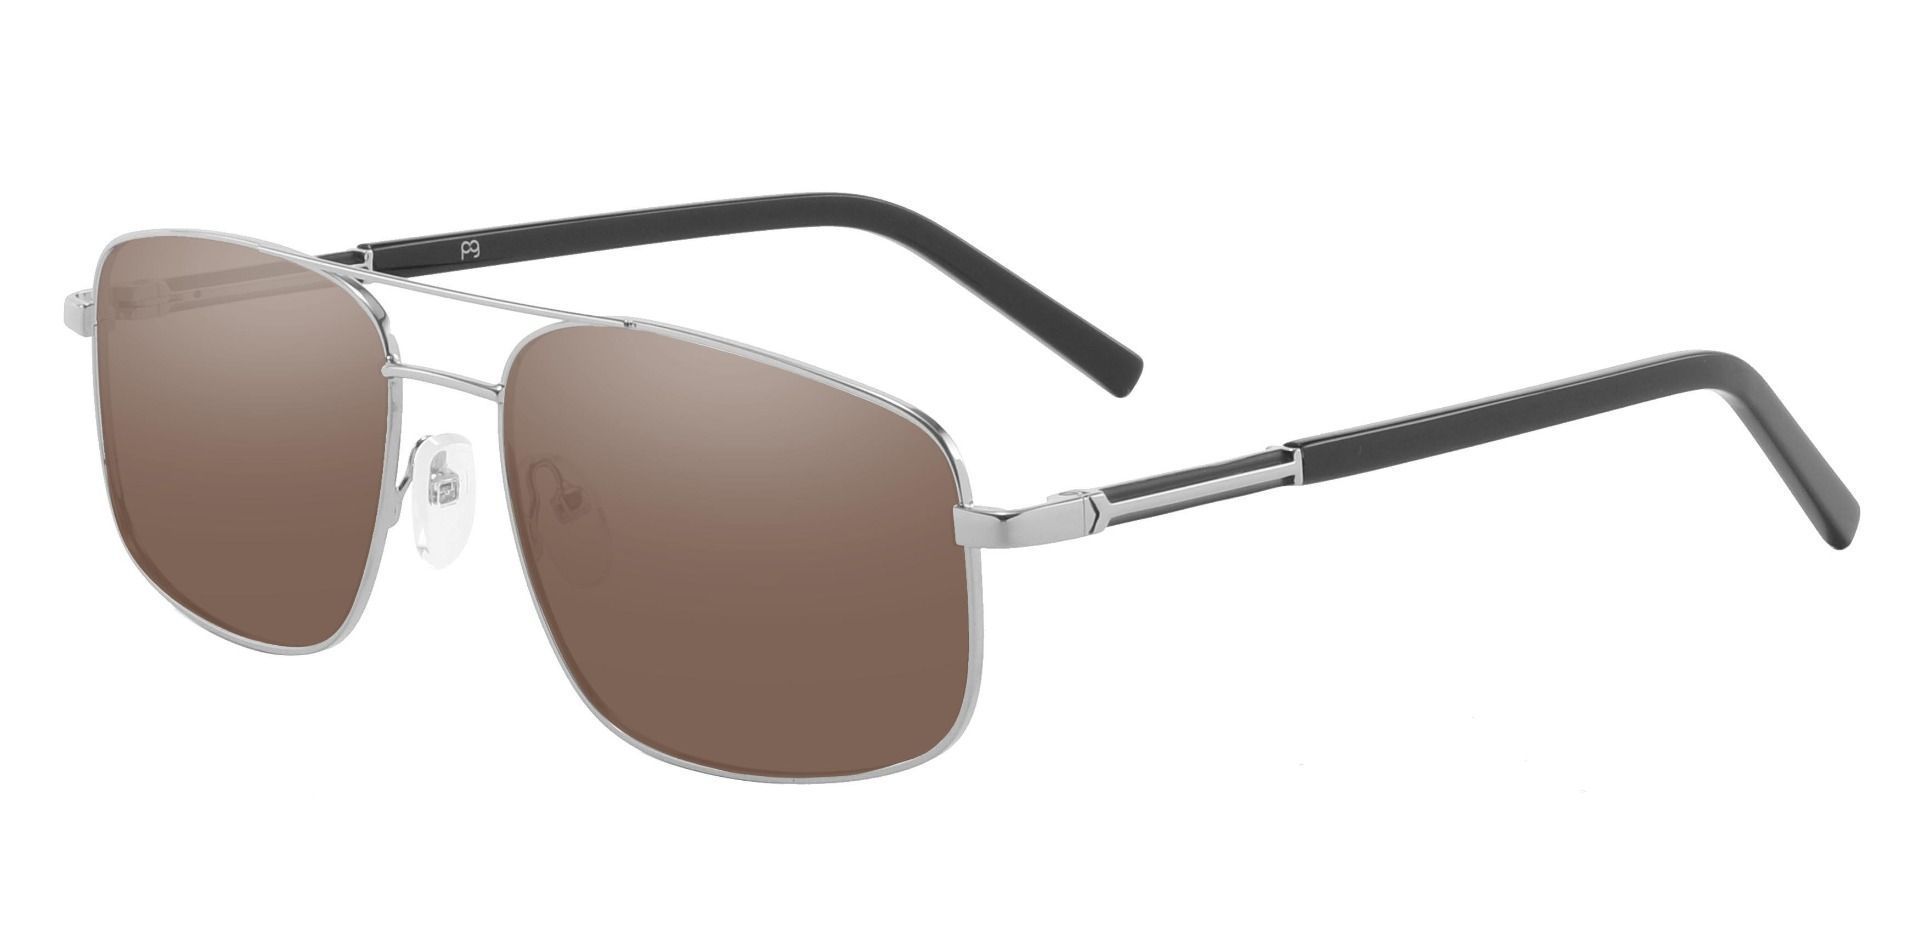 Davenport Aviator Progressive Sunglasses - Silver Frame With Brown Lenses